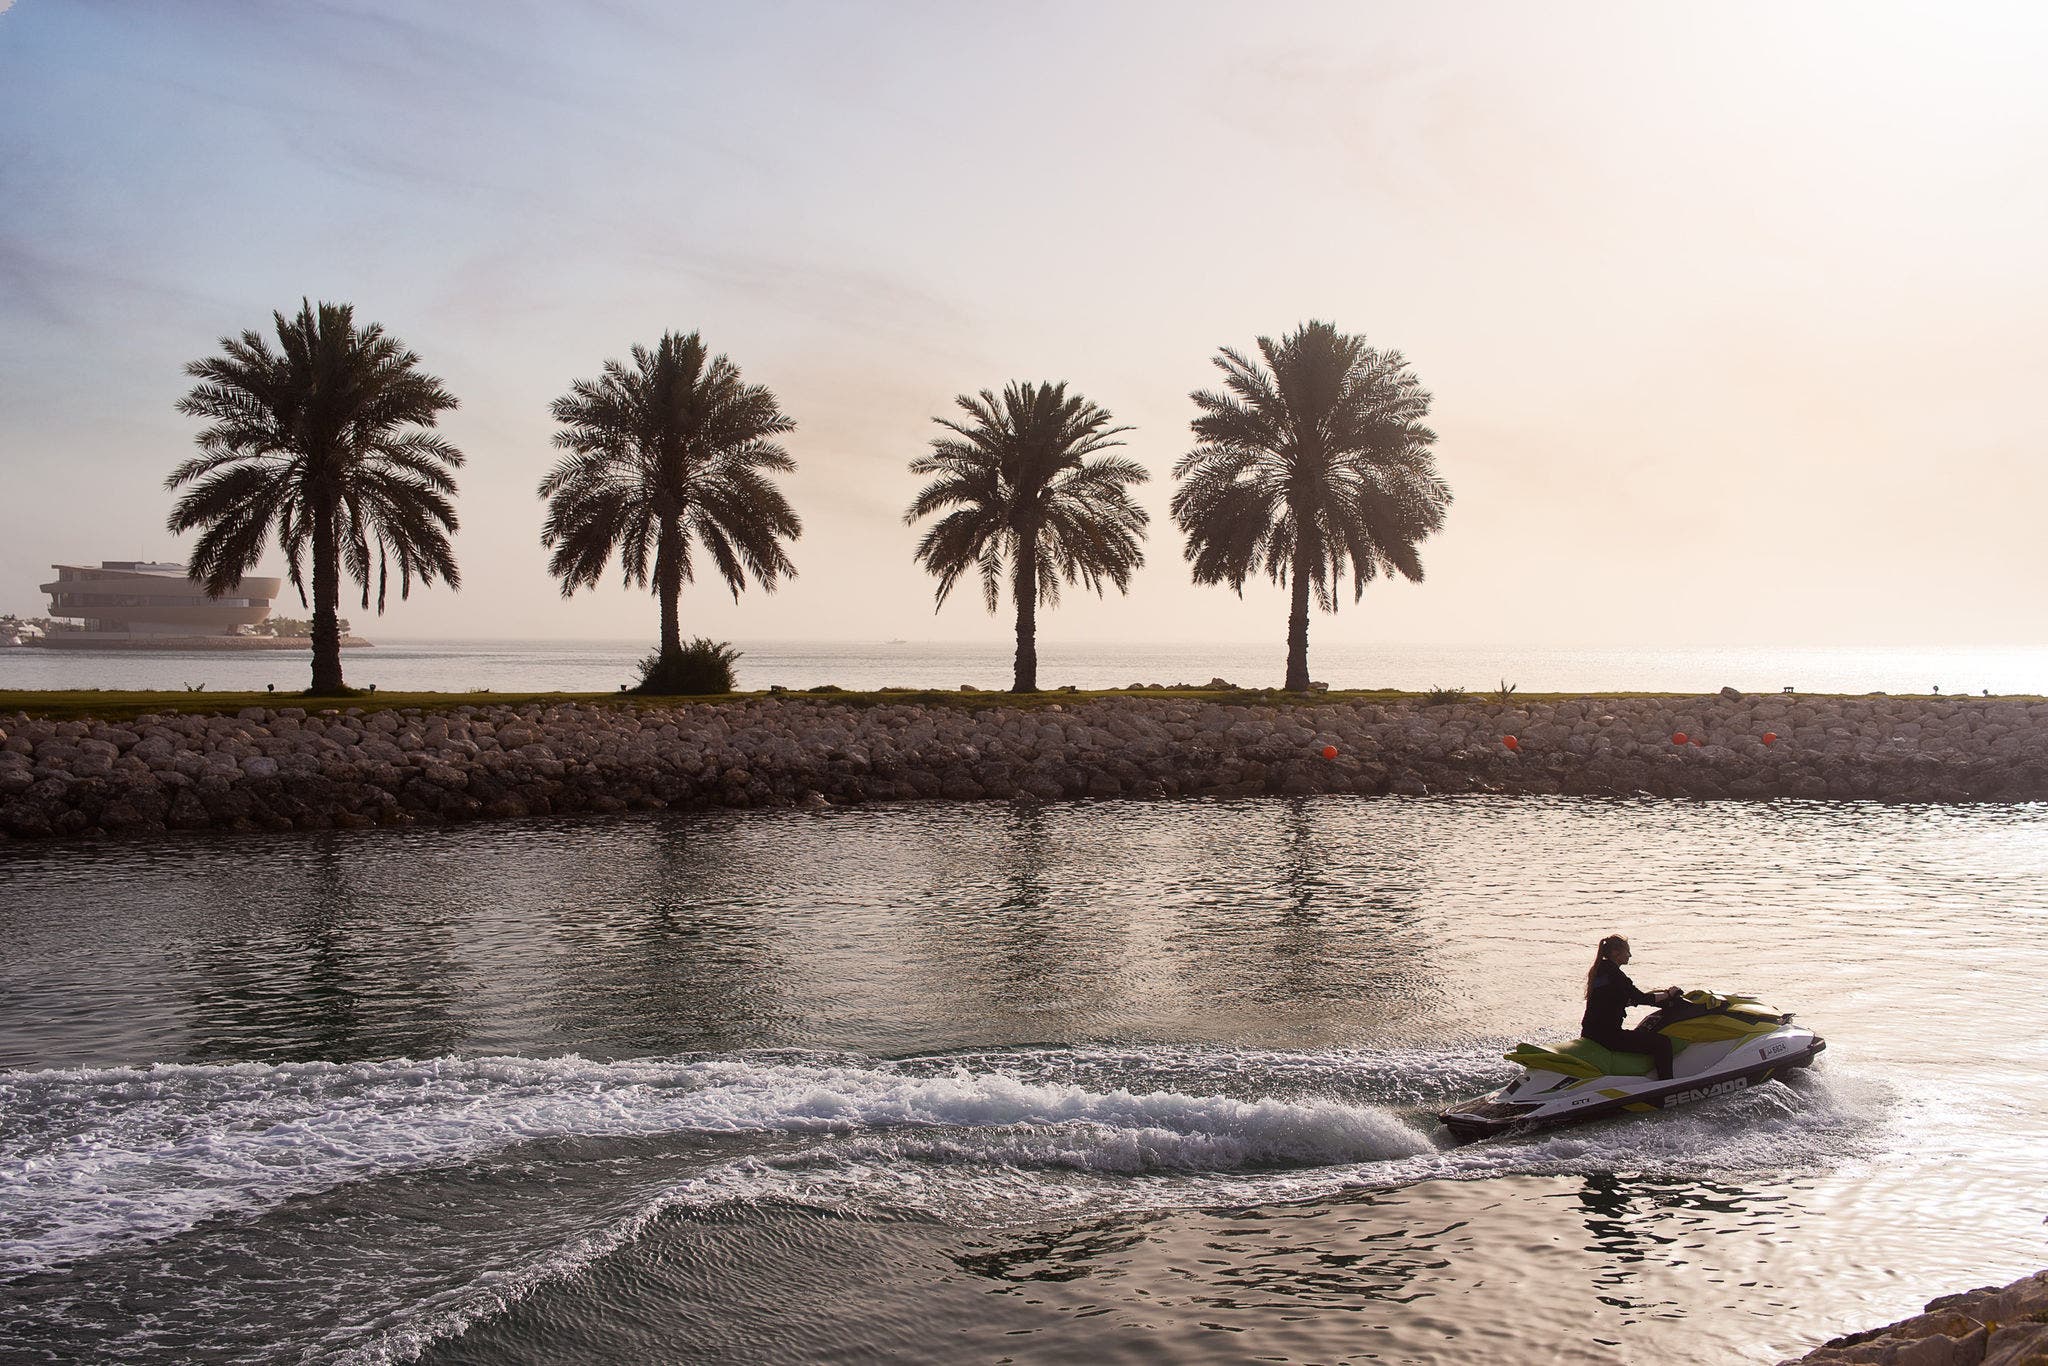 Qatar, a watersports haven